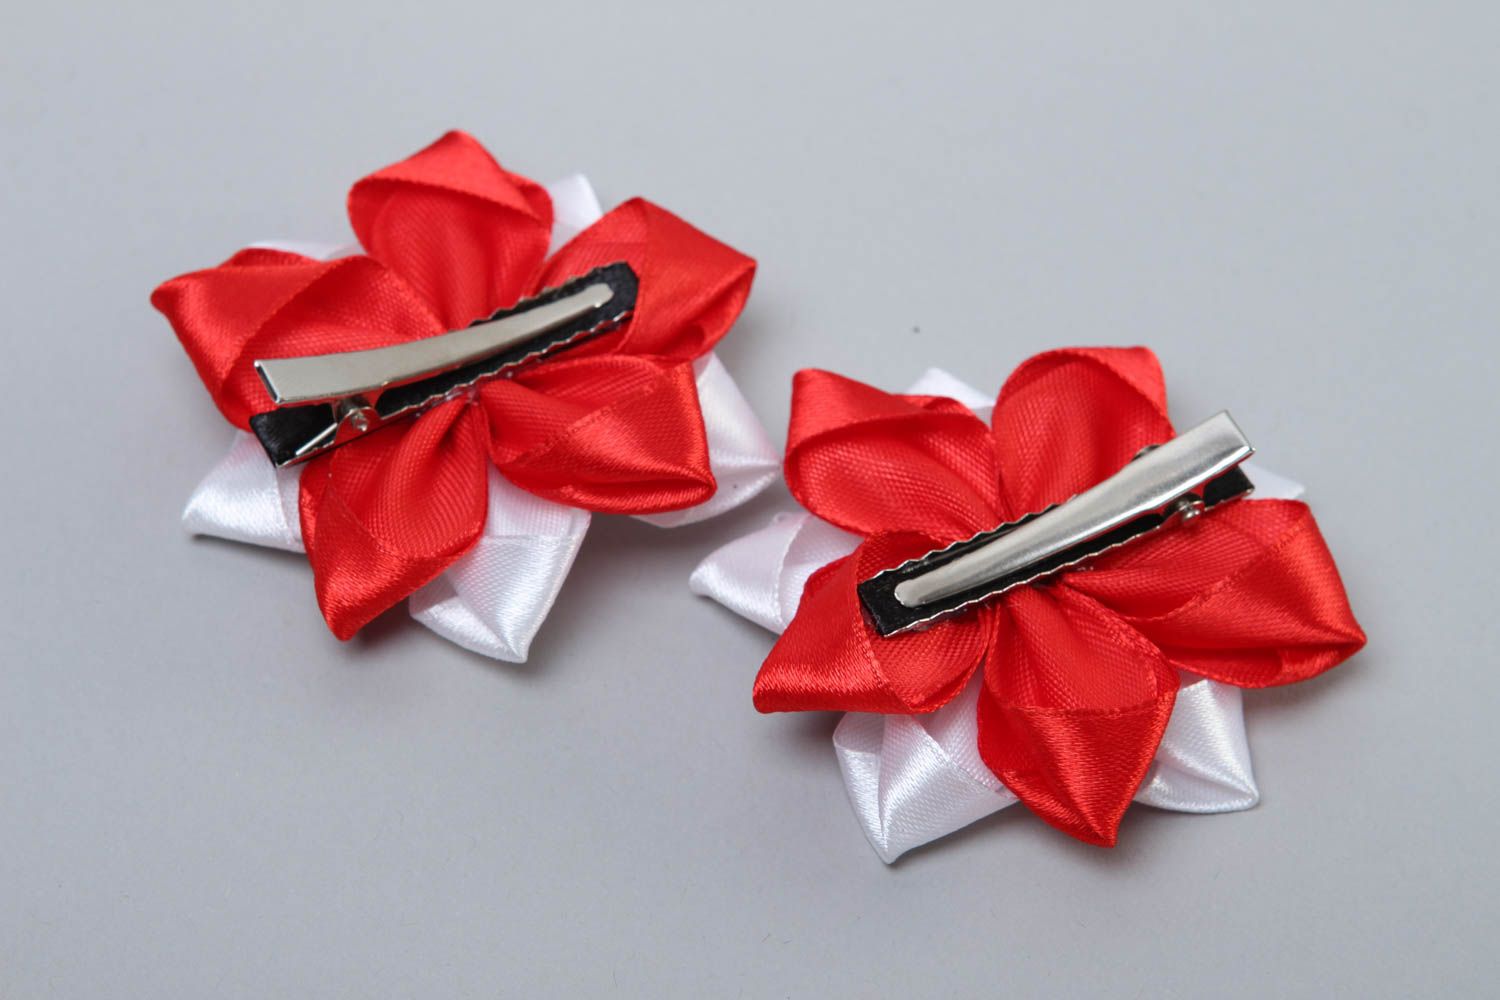 Handmade hair accessories kanzashi flowers hair clips gift ideas for women photo 4